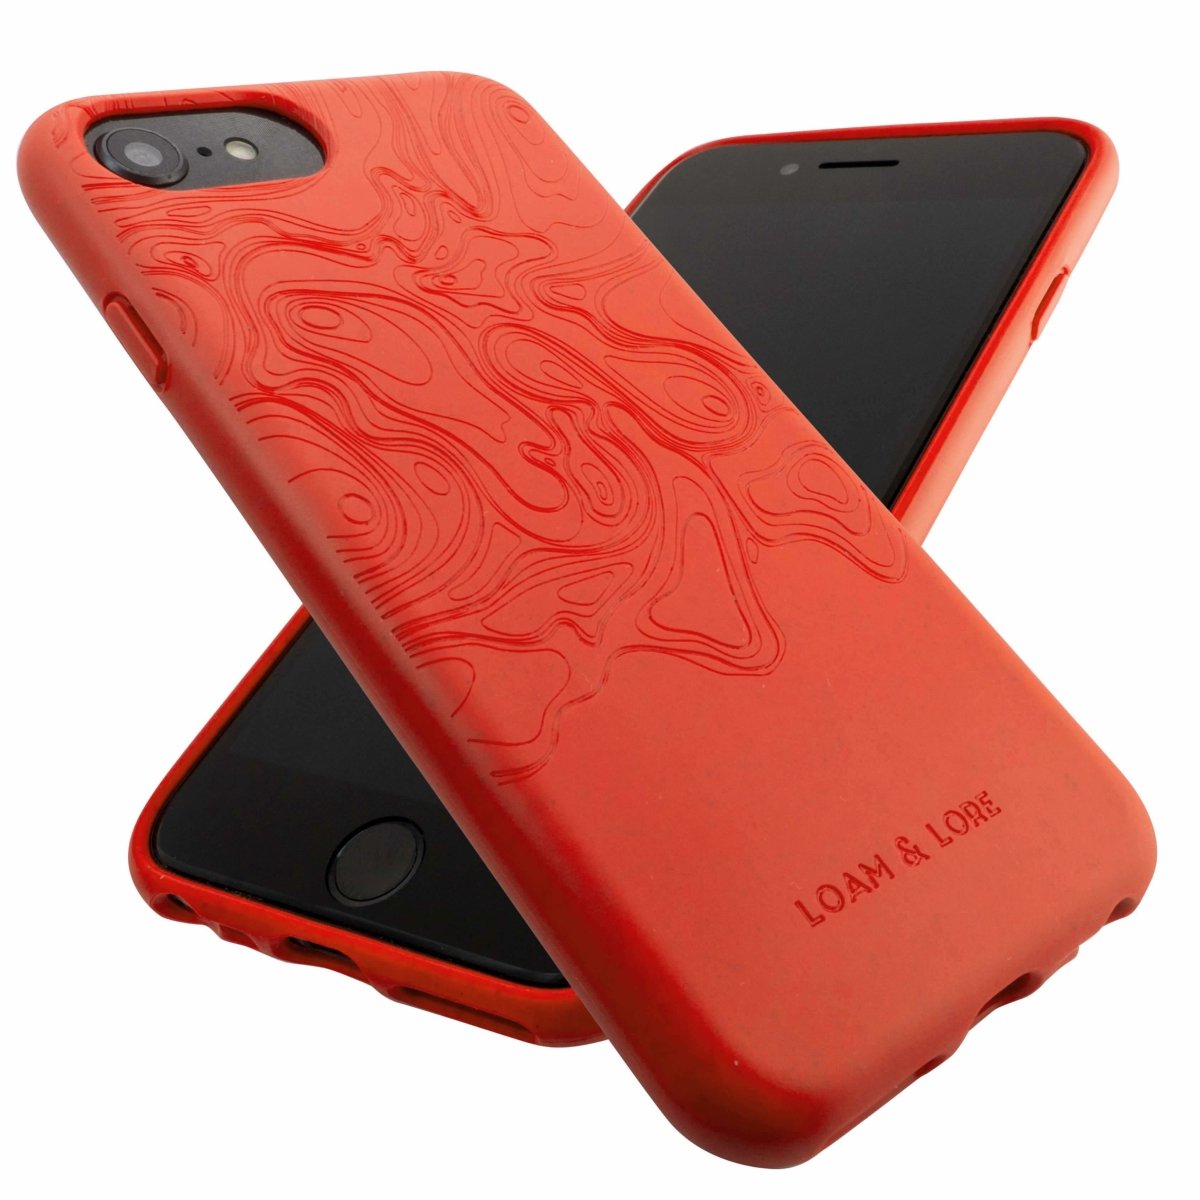 Sale -Biodegradable iPhone SE Case - Fits iPhone SE3/SE2/8/7/6 - Loam & Lore